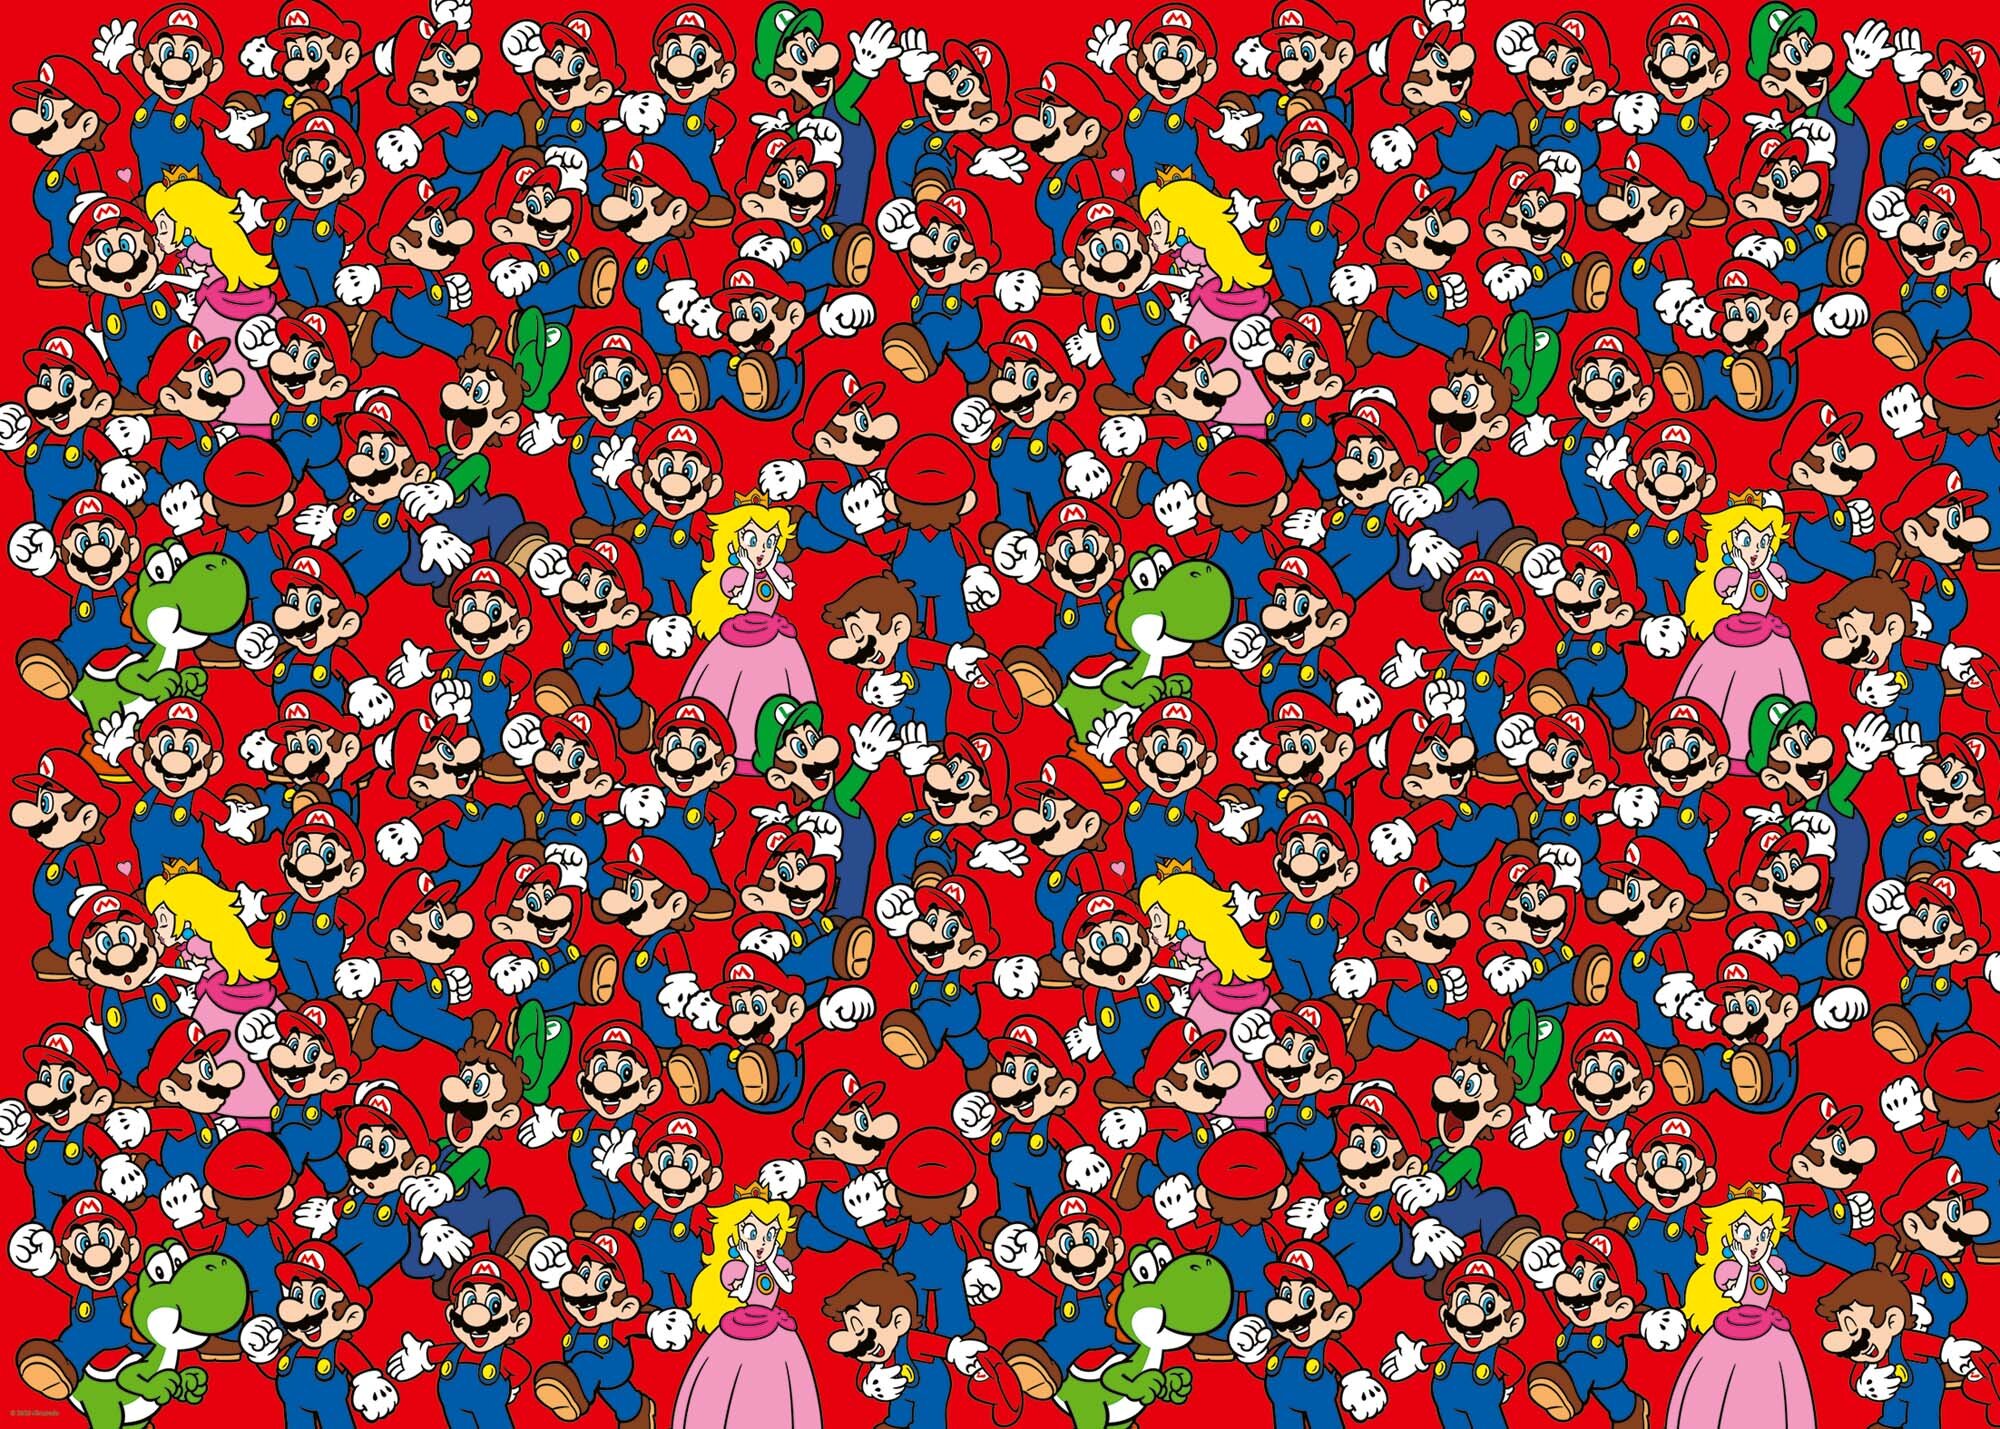 Ravensburger Puslespill, Super Mario Challenge 1000 brikker